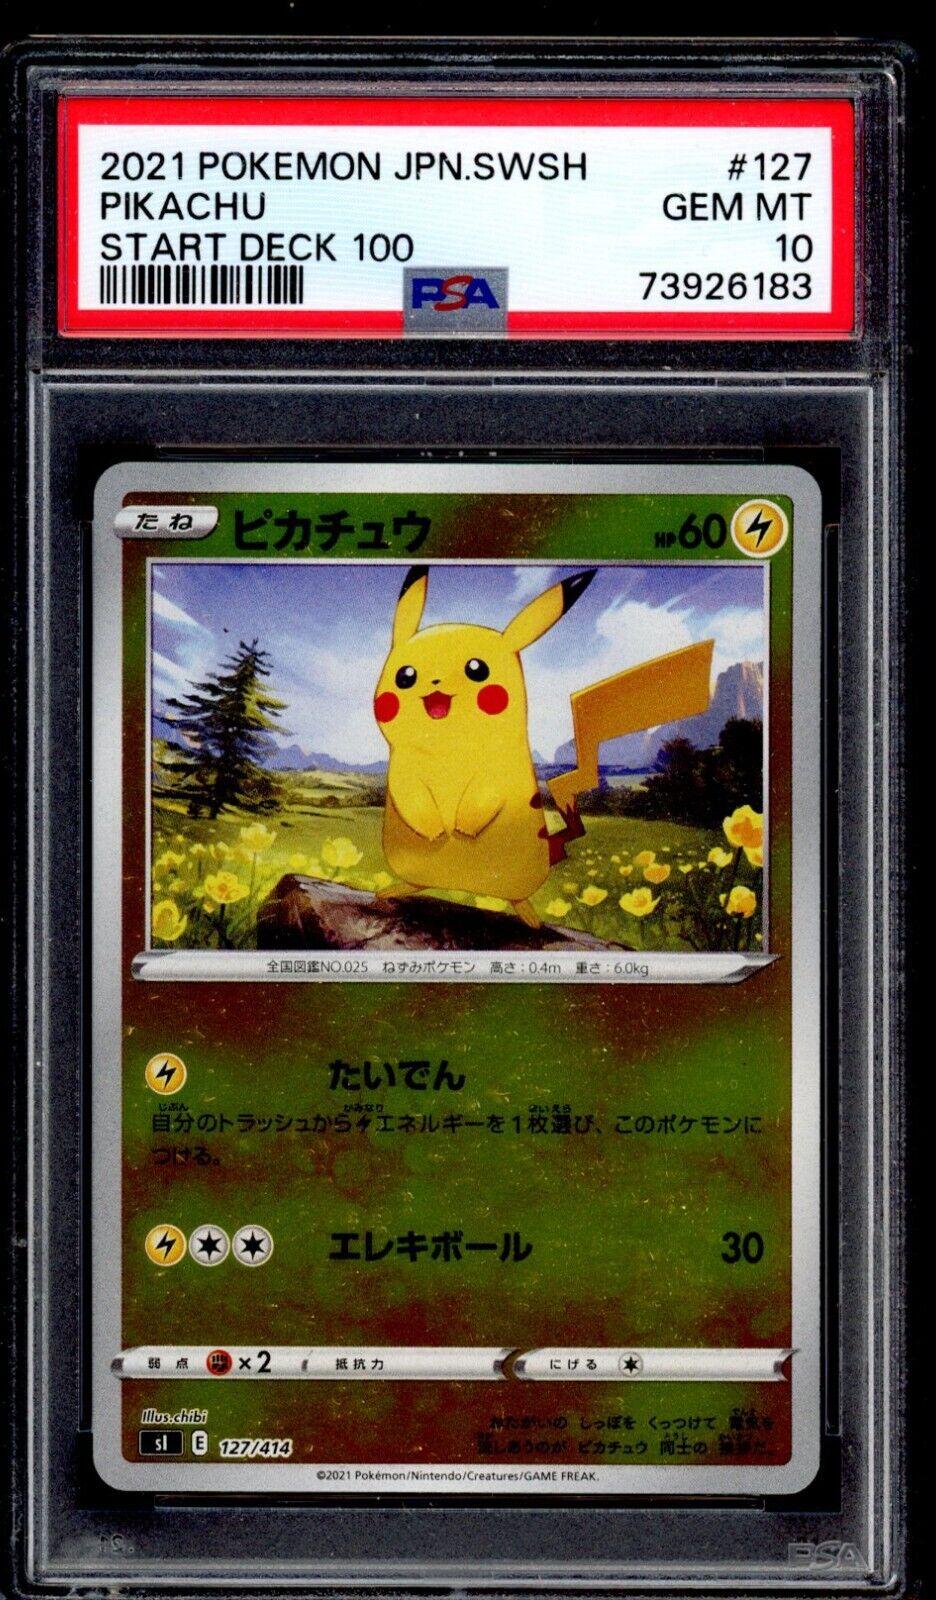 PSA 10 Pikachu 2021 Pokemon Card S1 127/414 Start Deck 100